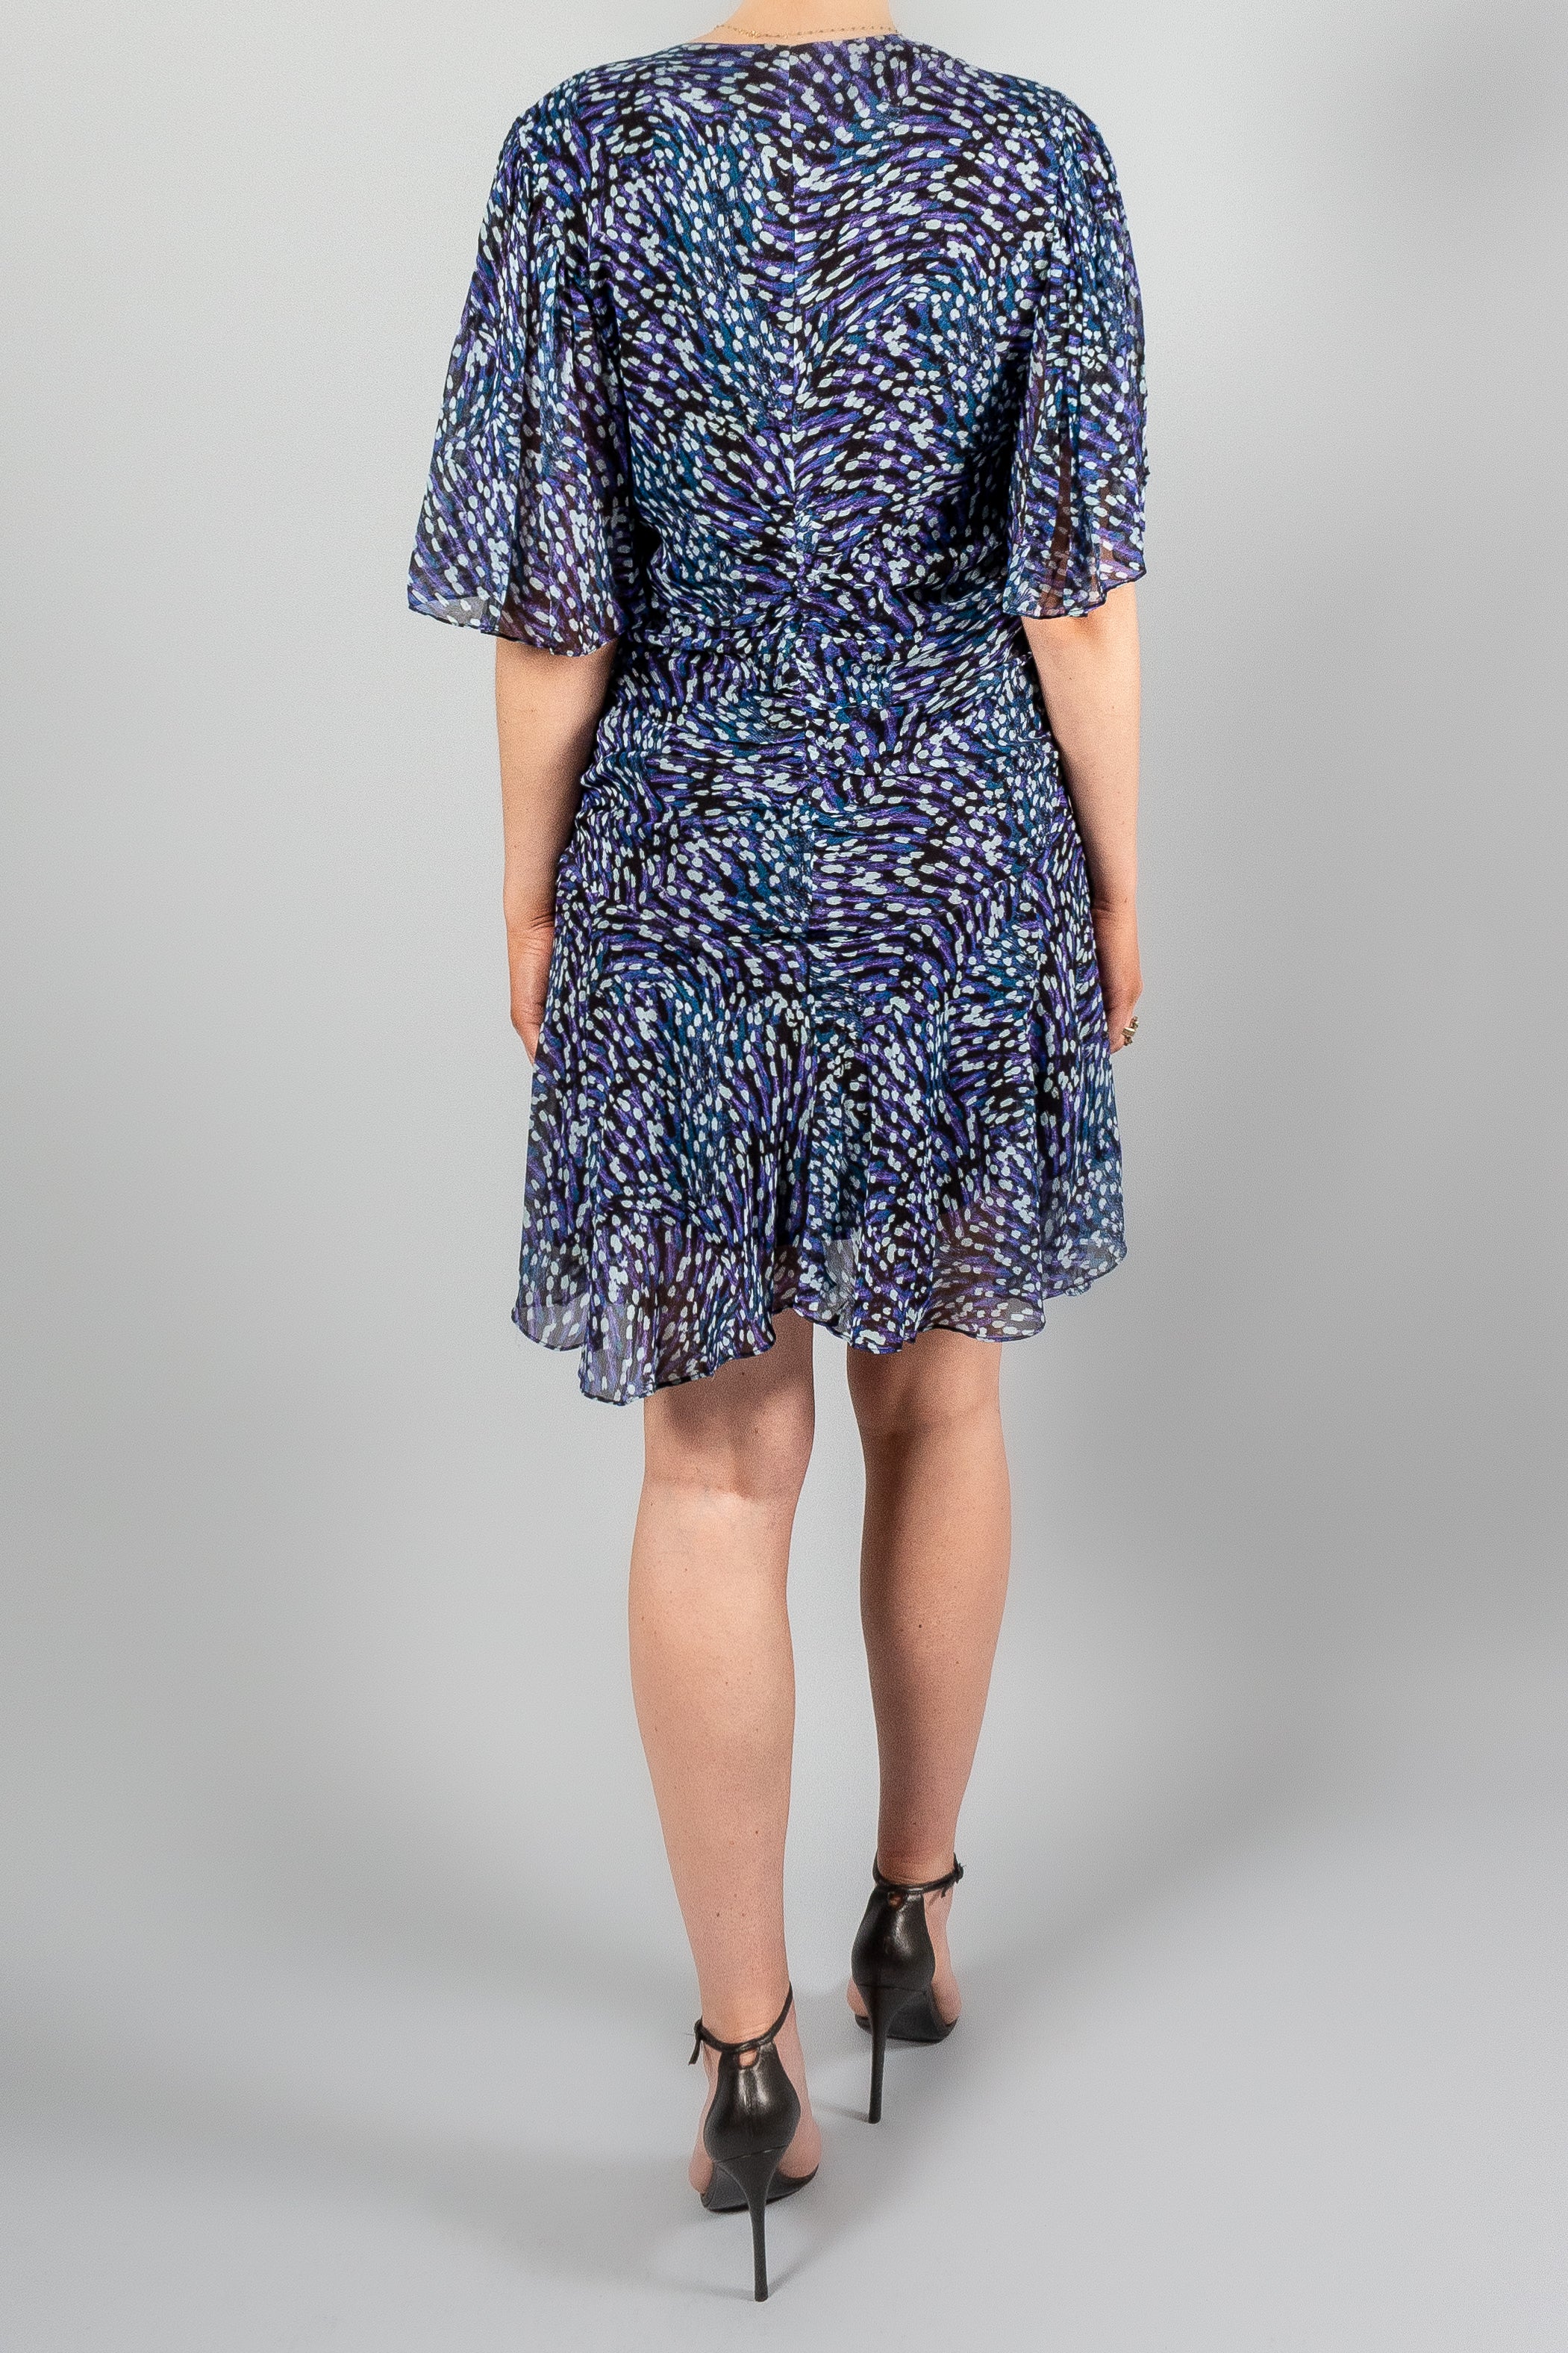 Isabel Marant Etoile Vivienne Dress-Dresses and Jumpsuits-Misch-Boutique-Vancouver-Canada-misch.ca